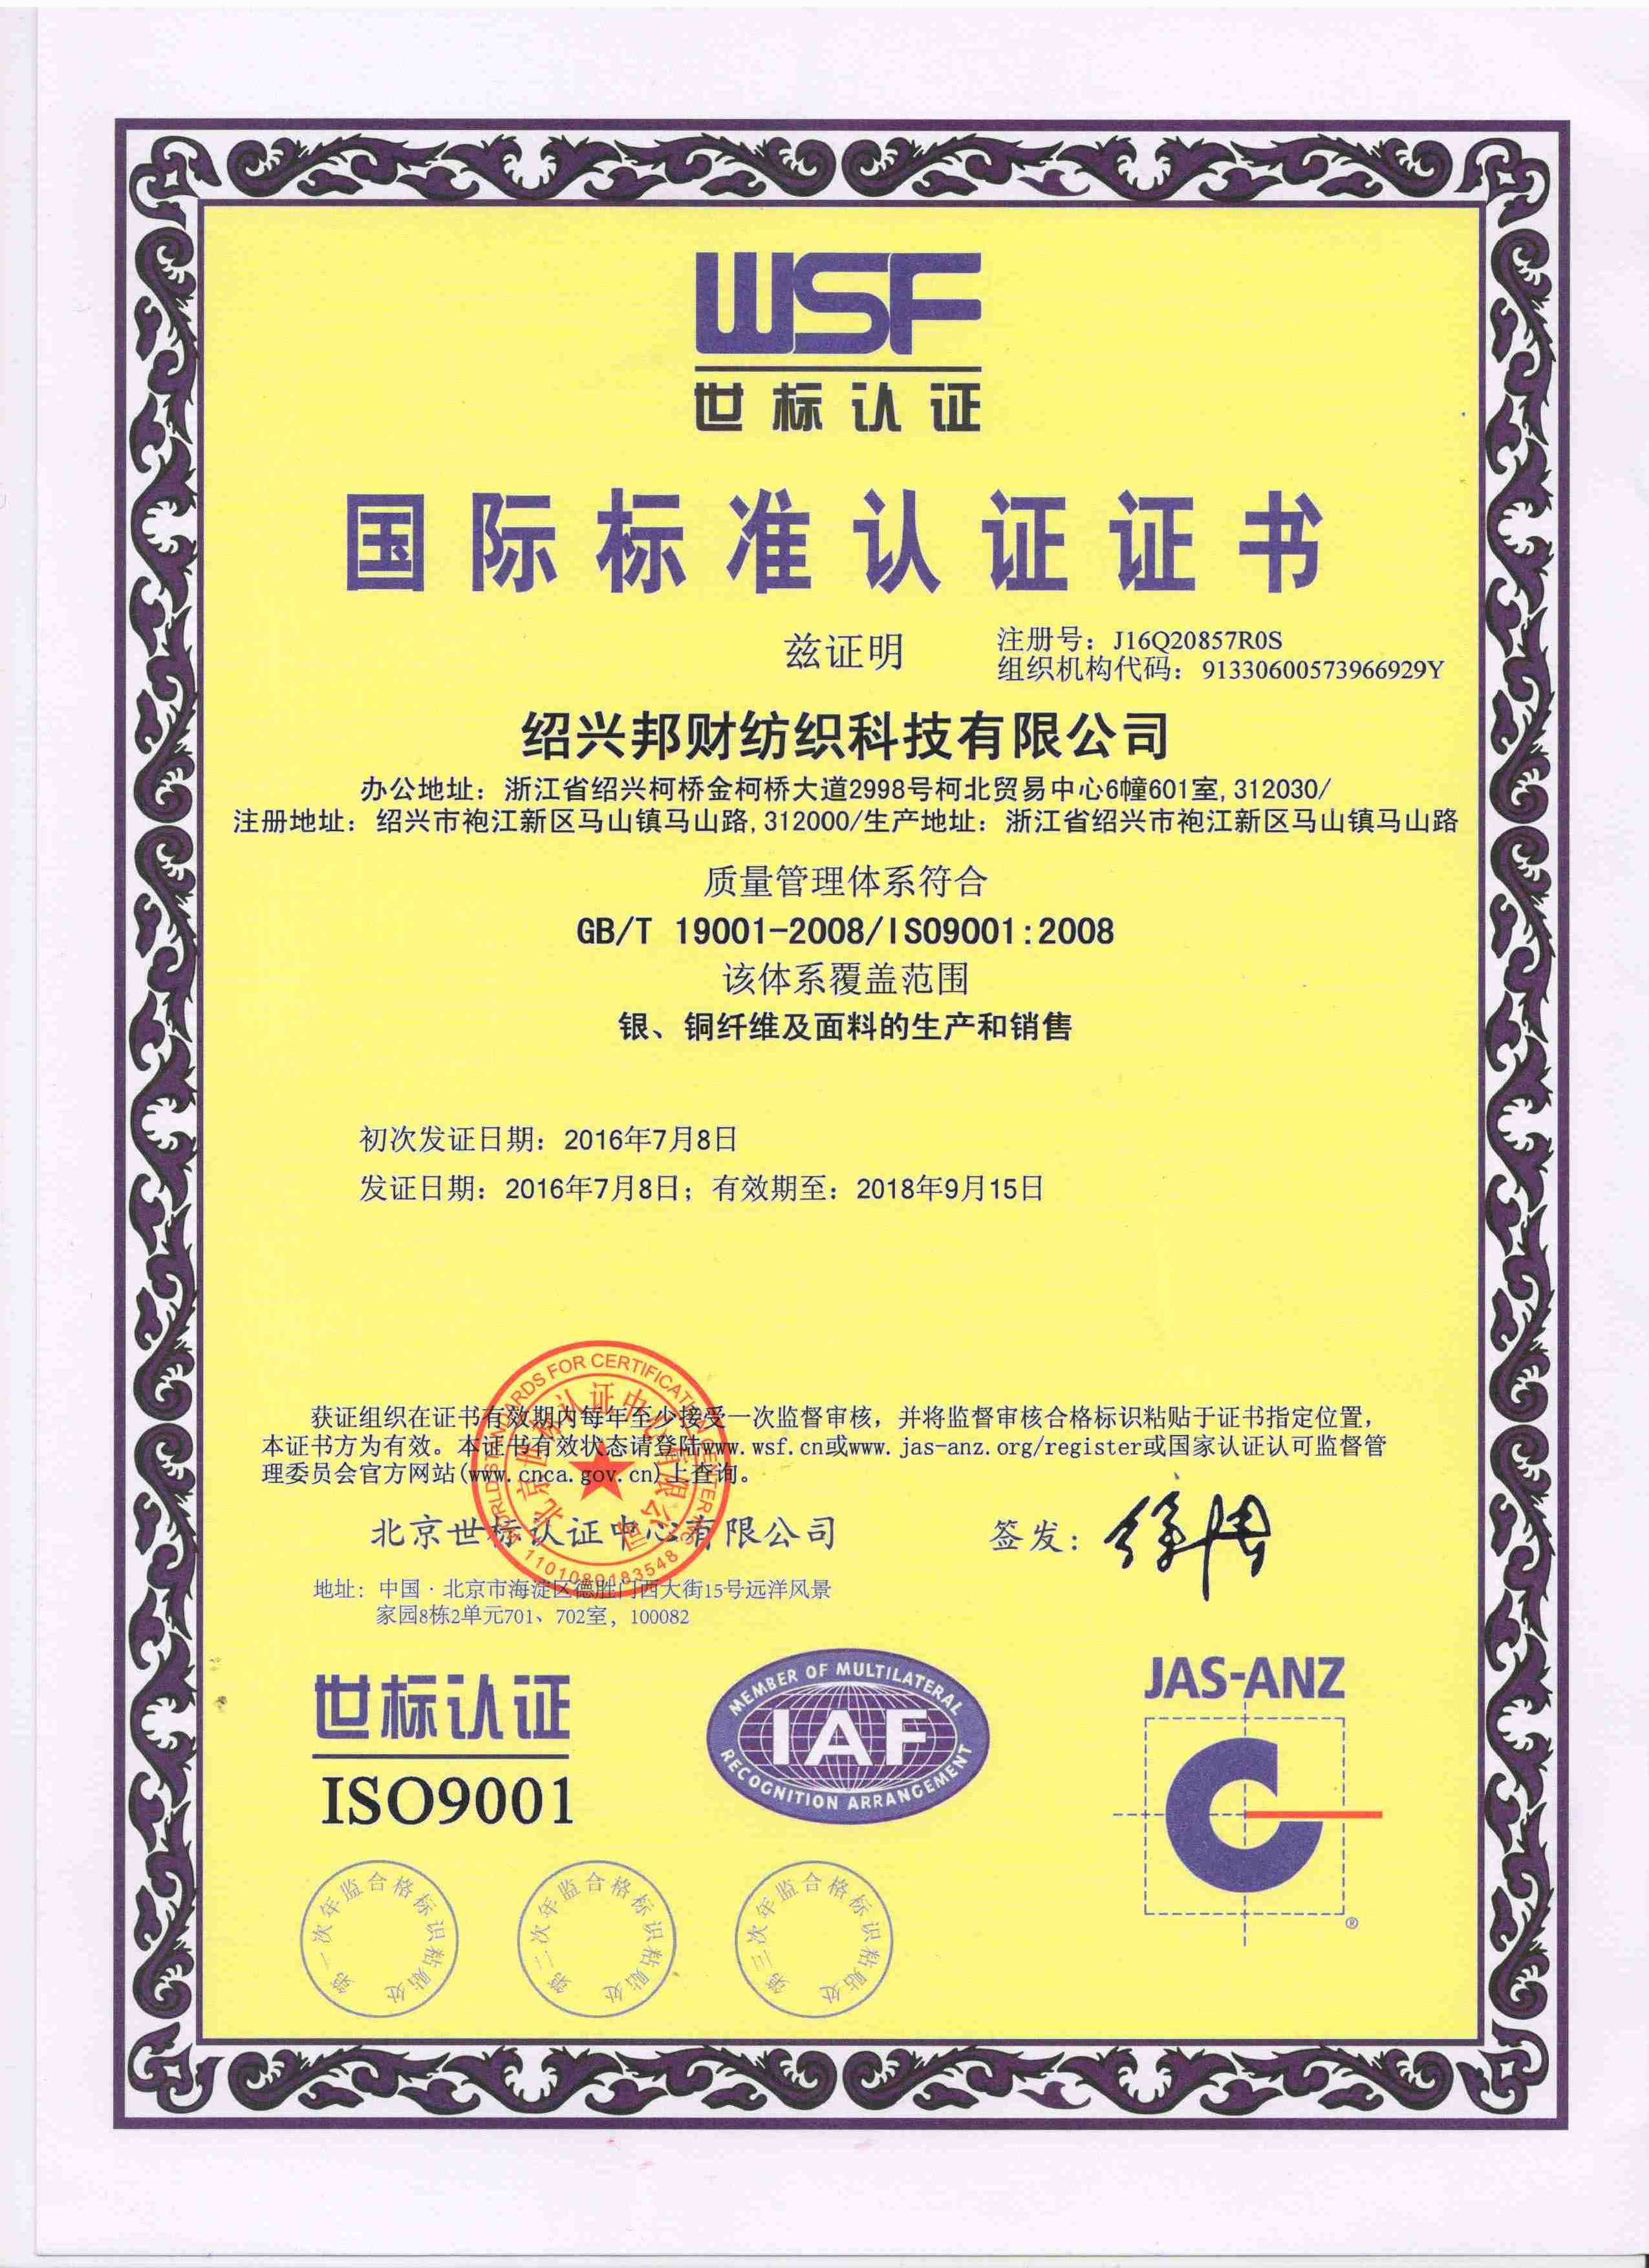 公司通过ISO9001认证